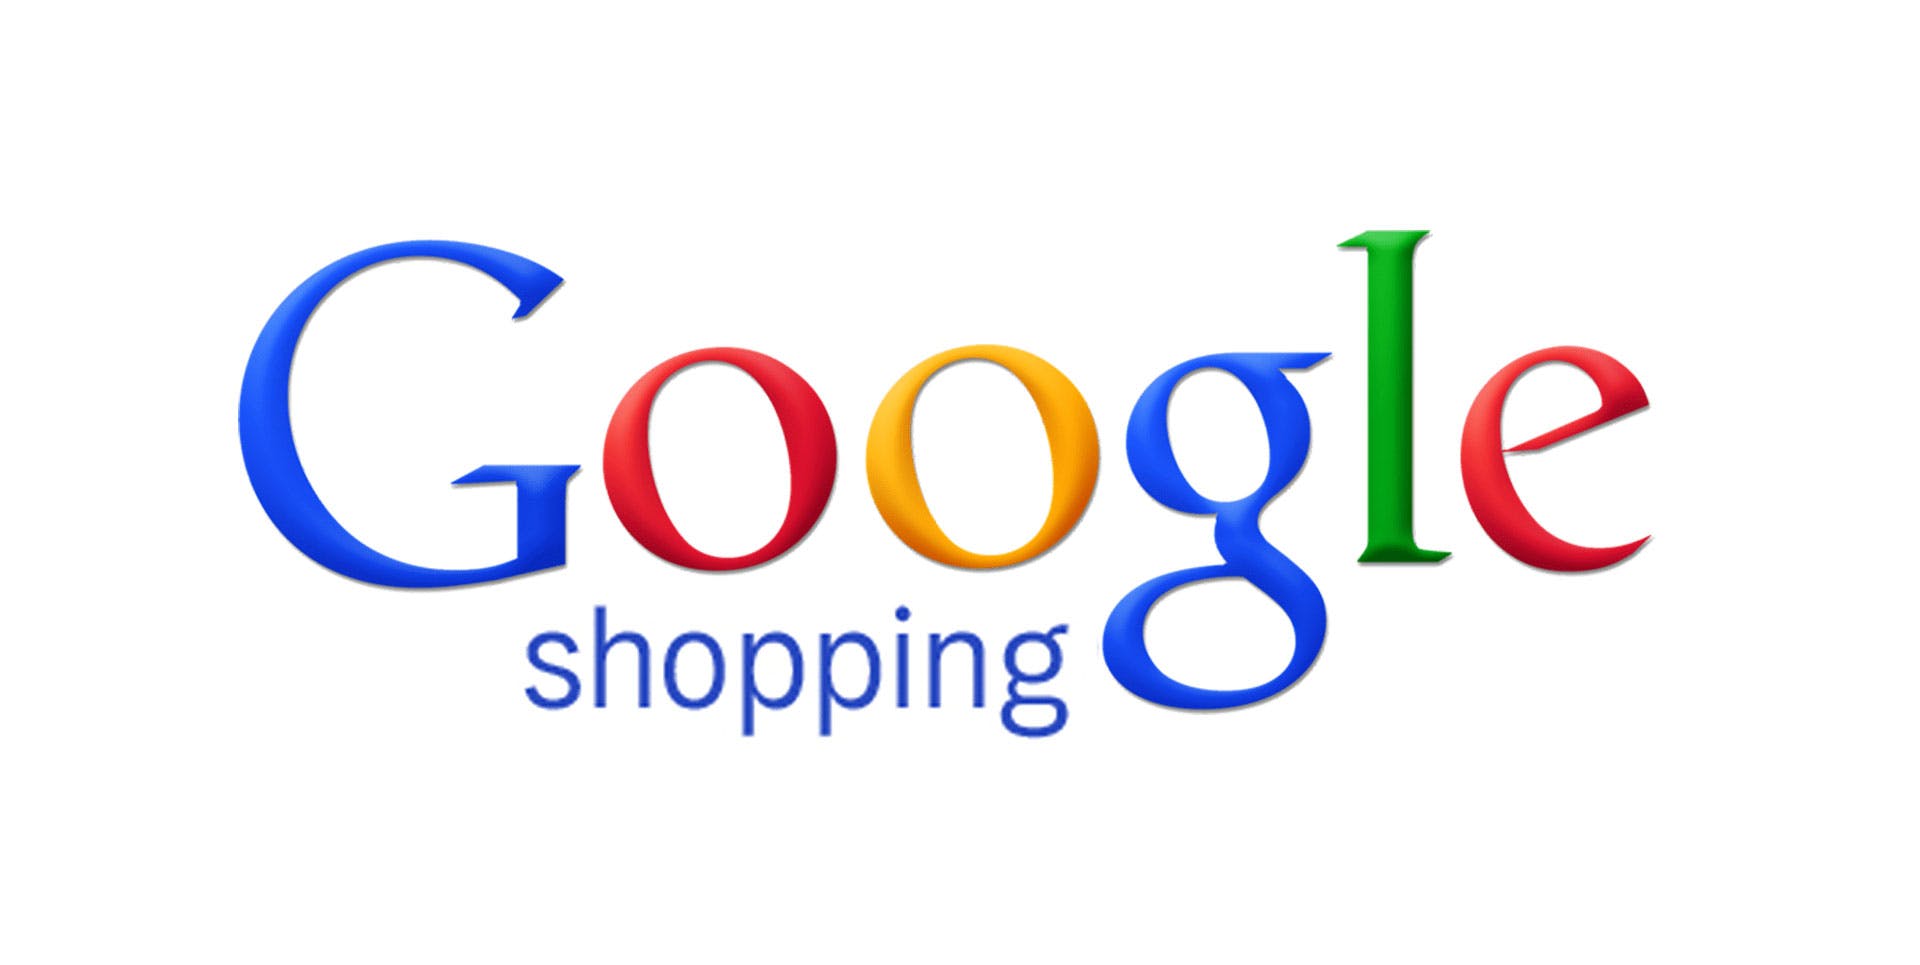 Google Shopping Updates